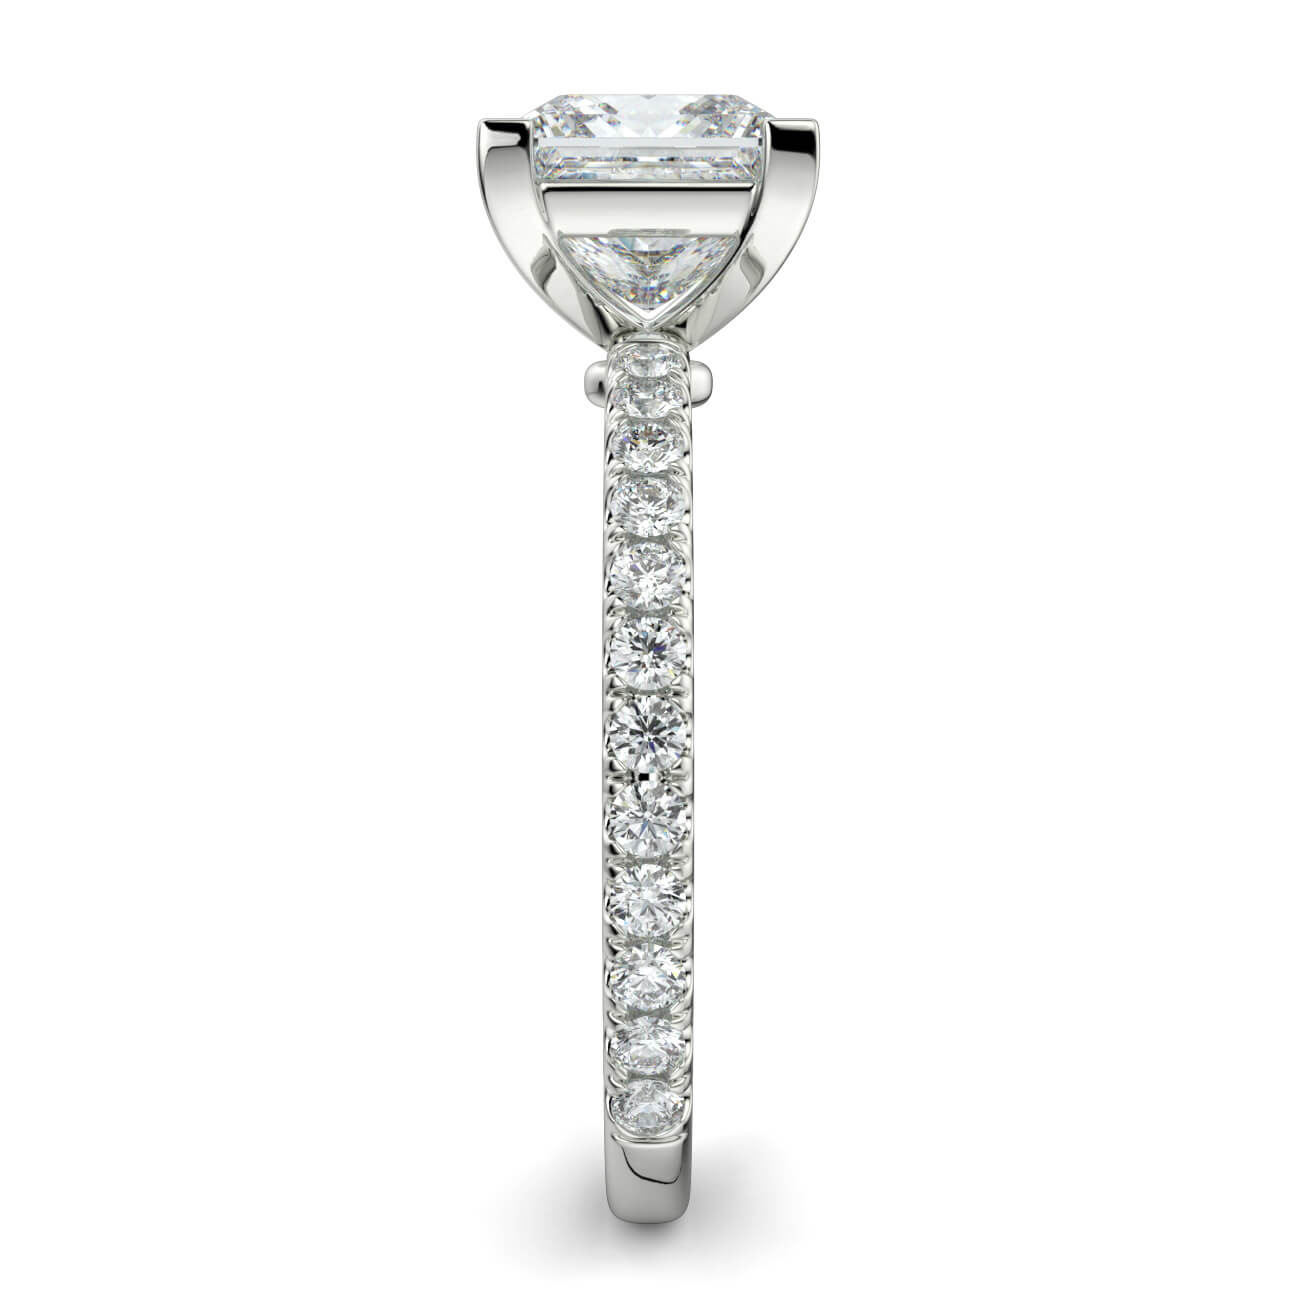 Delicate ‘Liat’ Princess Cut Diamond Engagement Ring in 18k White Gold – Australian Diamond Network